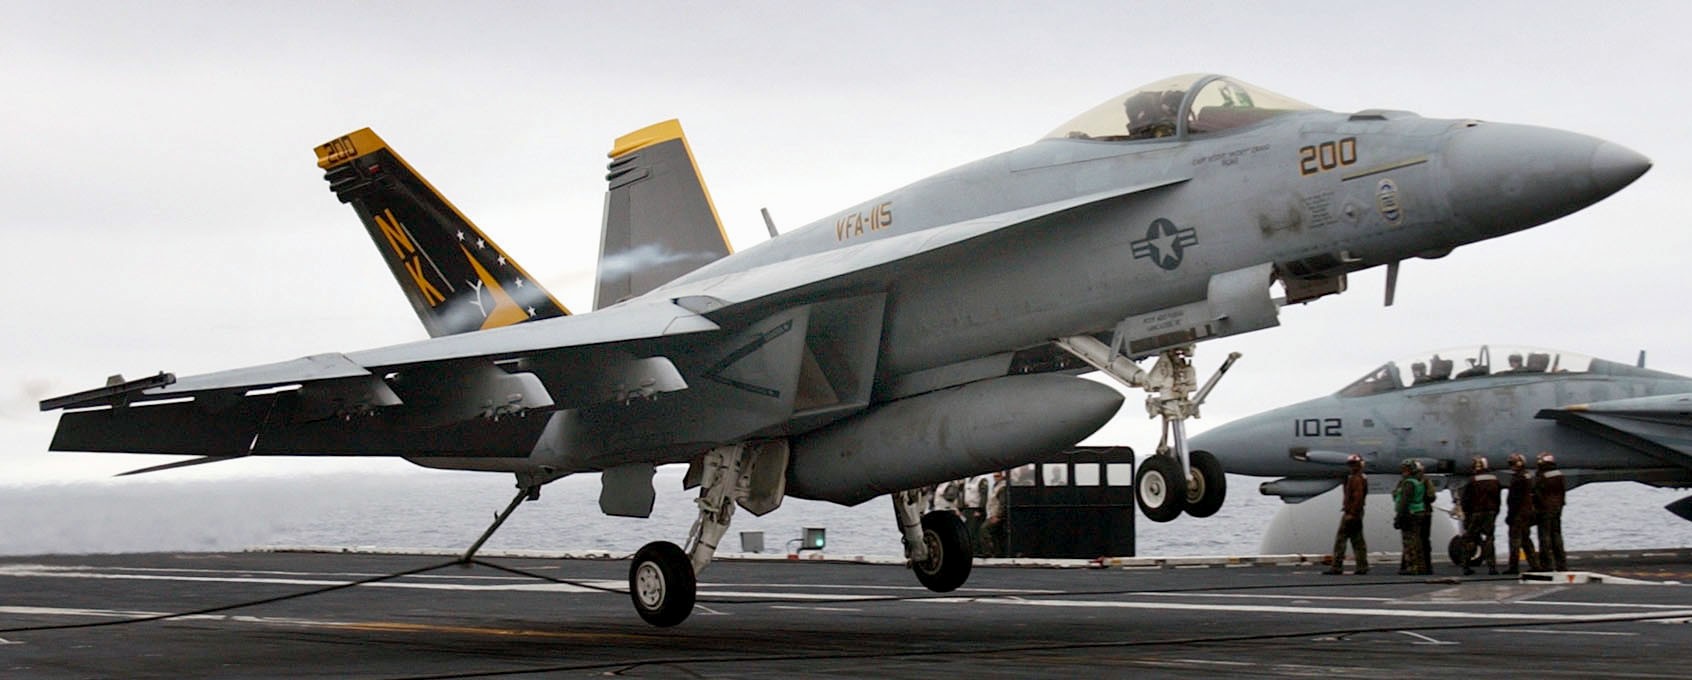 vfa-115 eagles strike fighter squadron f/a-18e super hornet cvw-14 uss john c. stennis cvn-74 2004 56